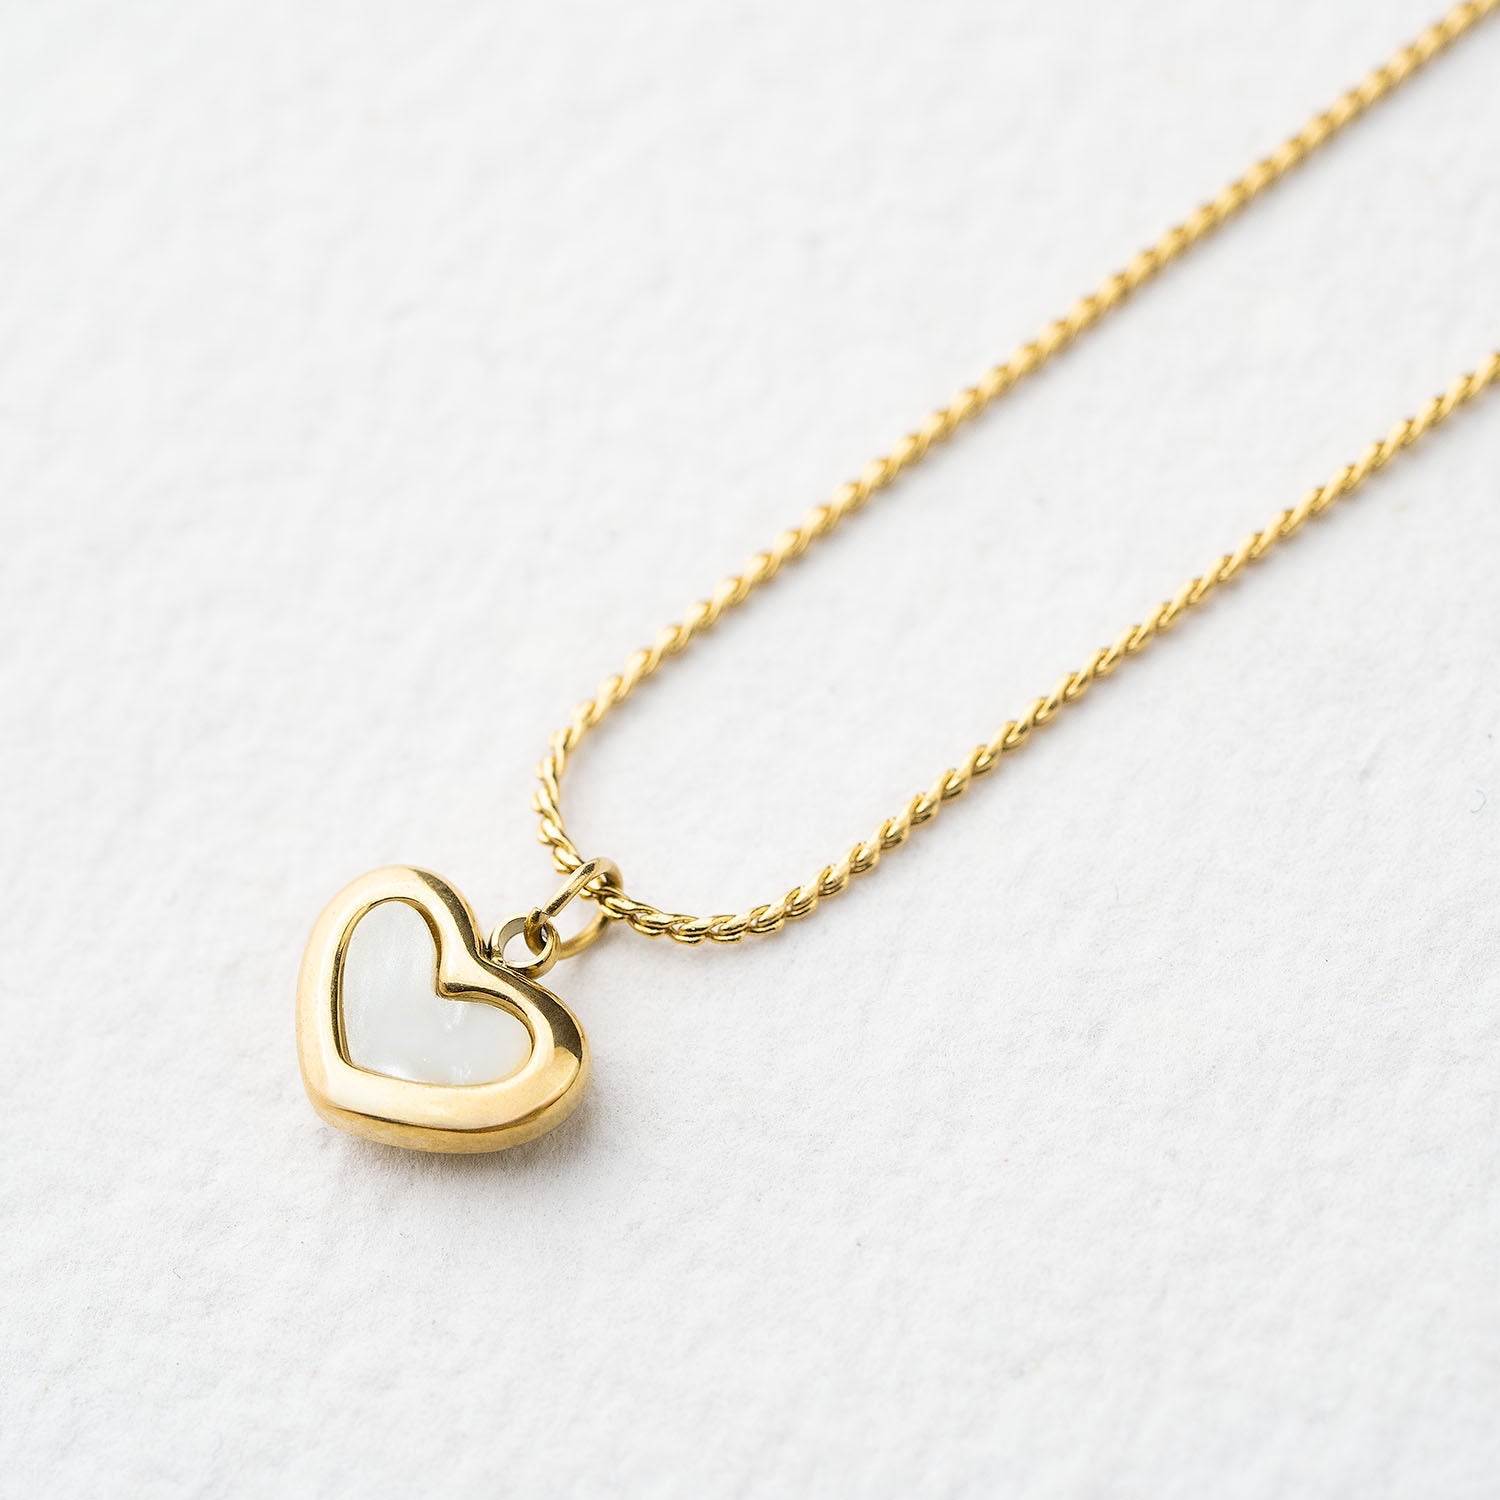 W Premium Jewellery Gold Heart Pendant Reversible Necklace